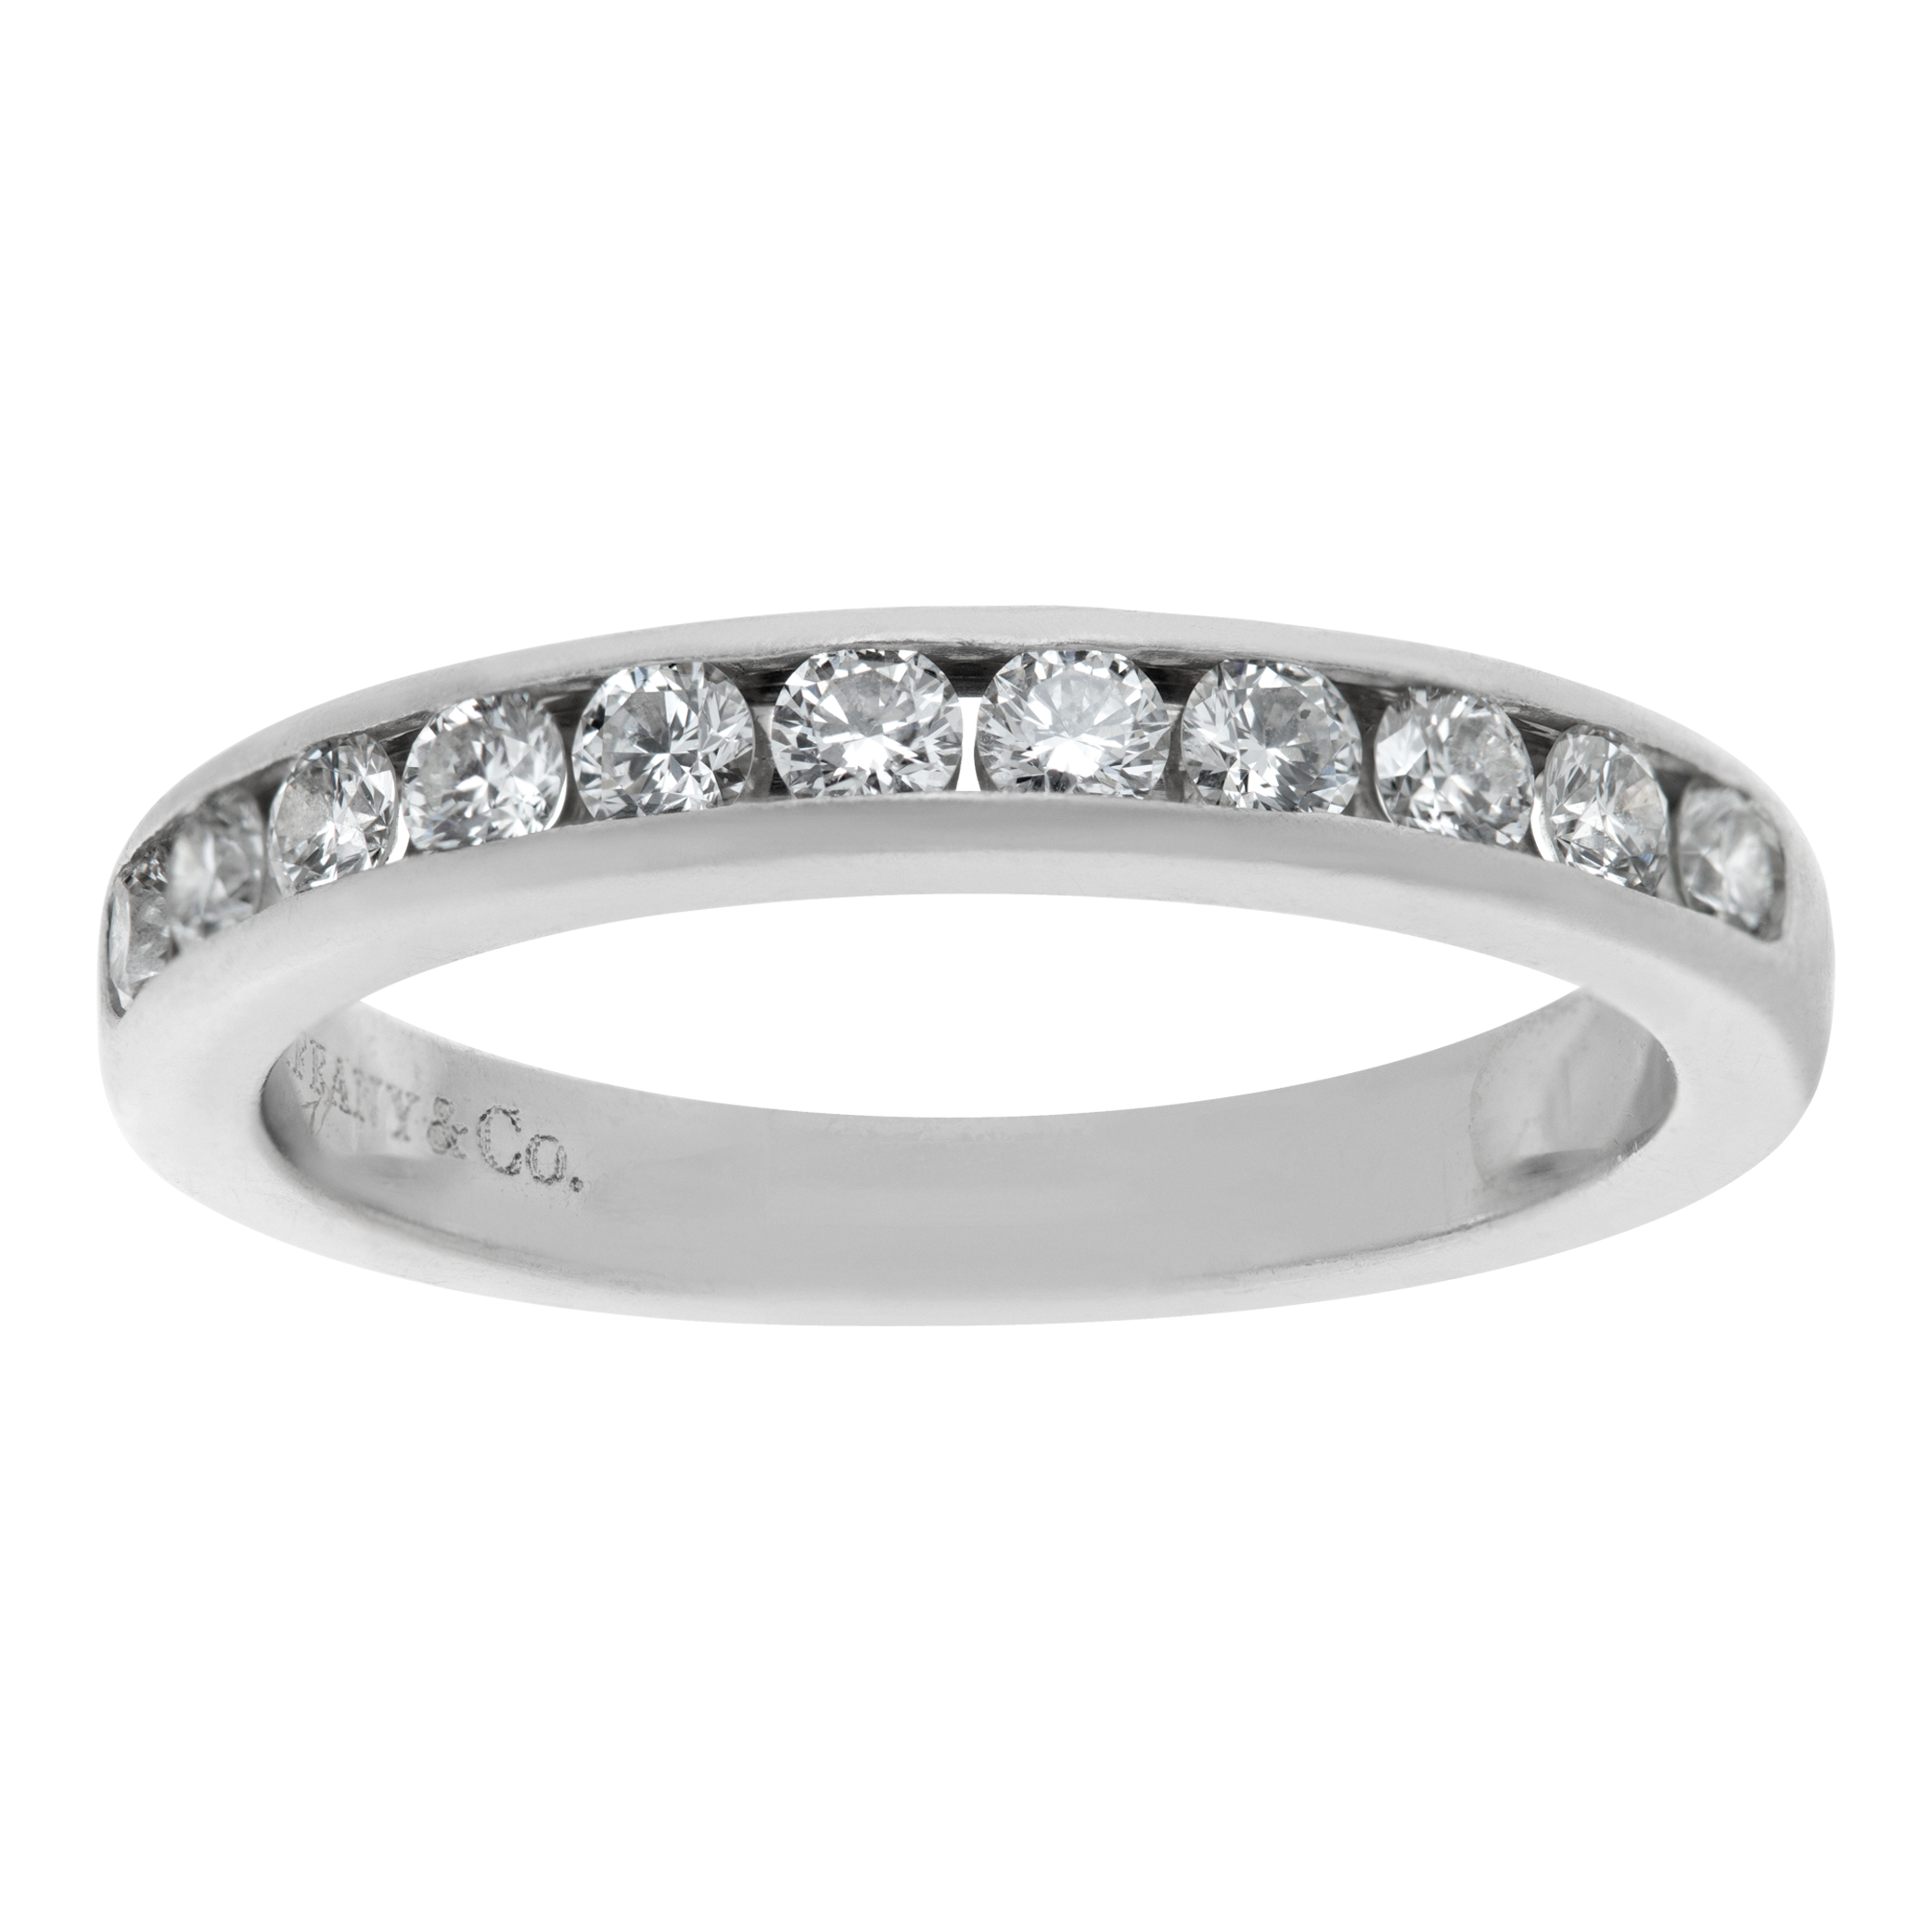 Tiffany & Co. diamond wedding band in platinum with a half-circle of diamonds